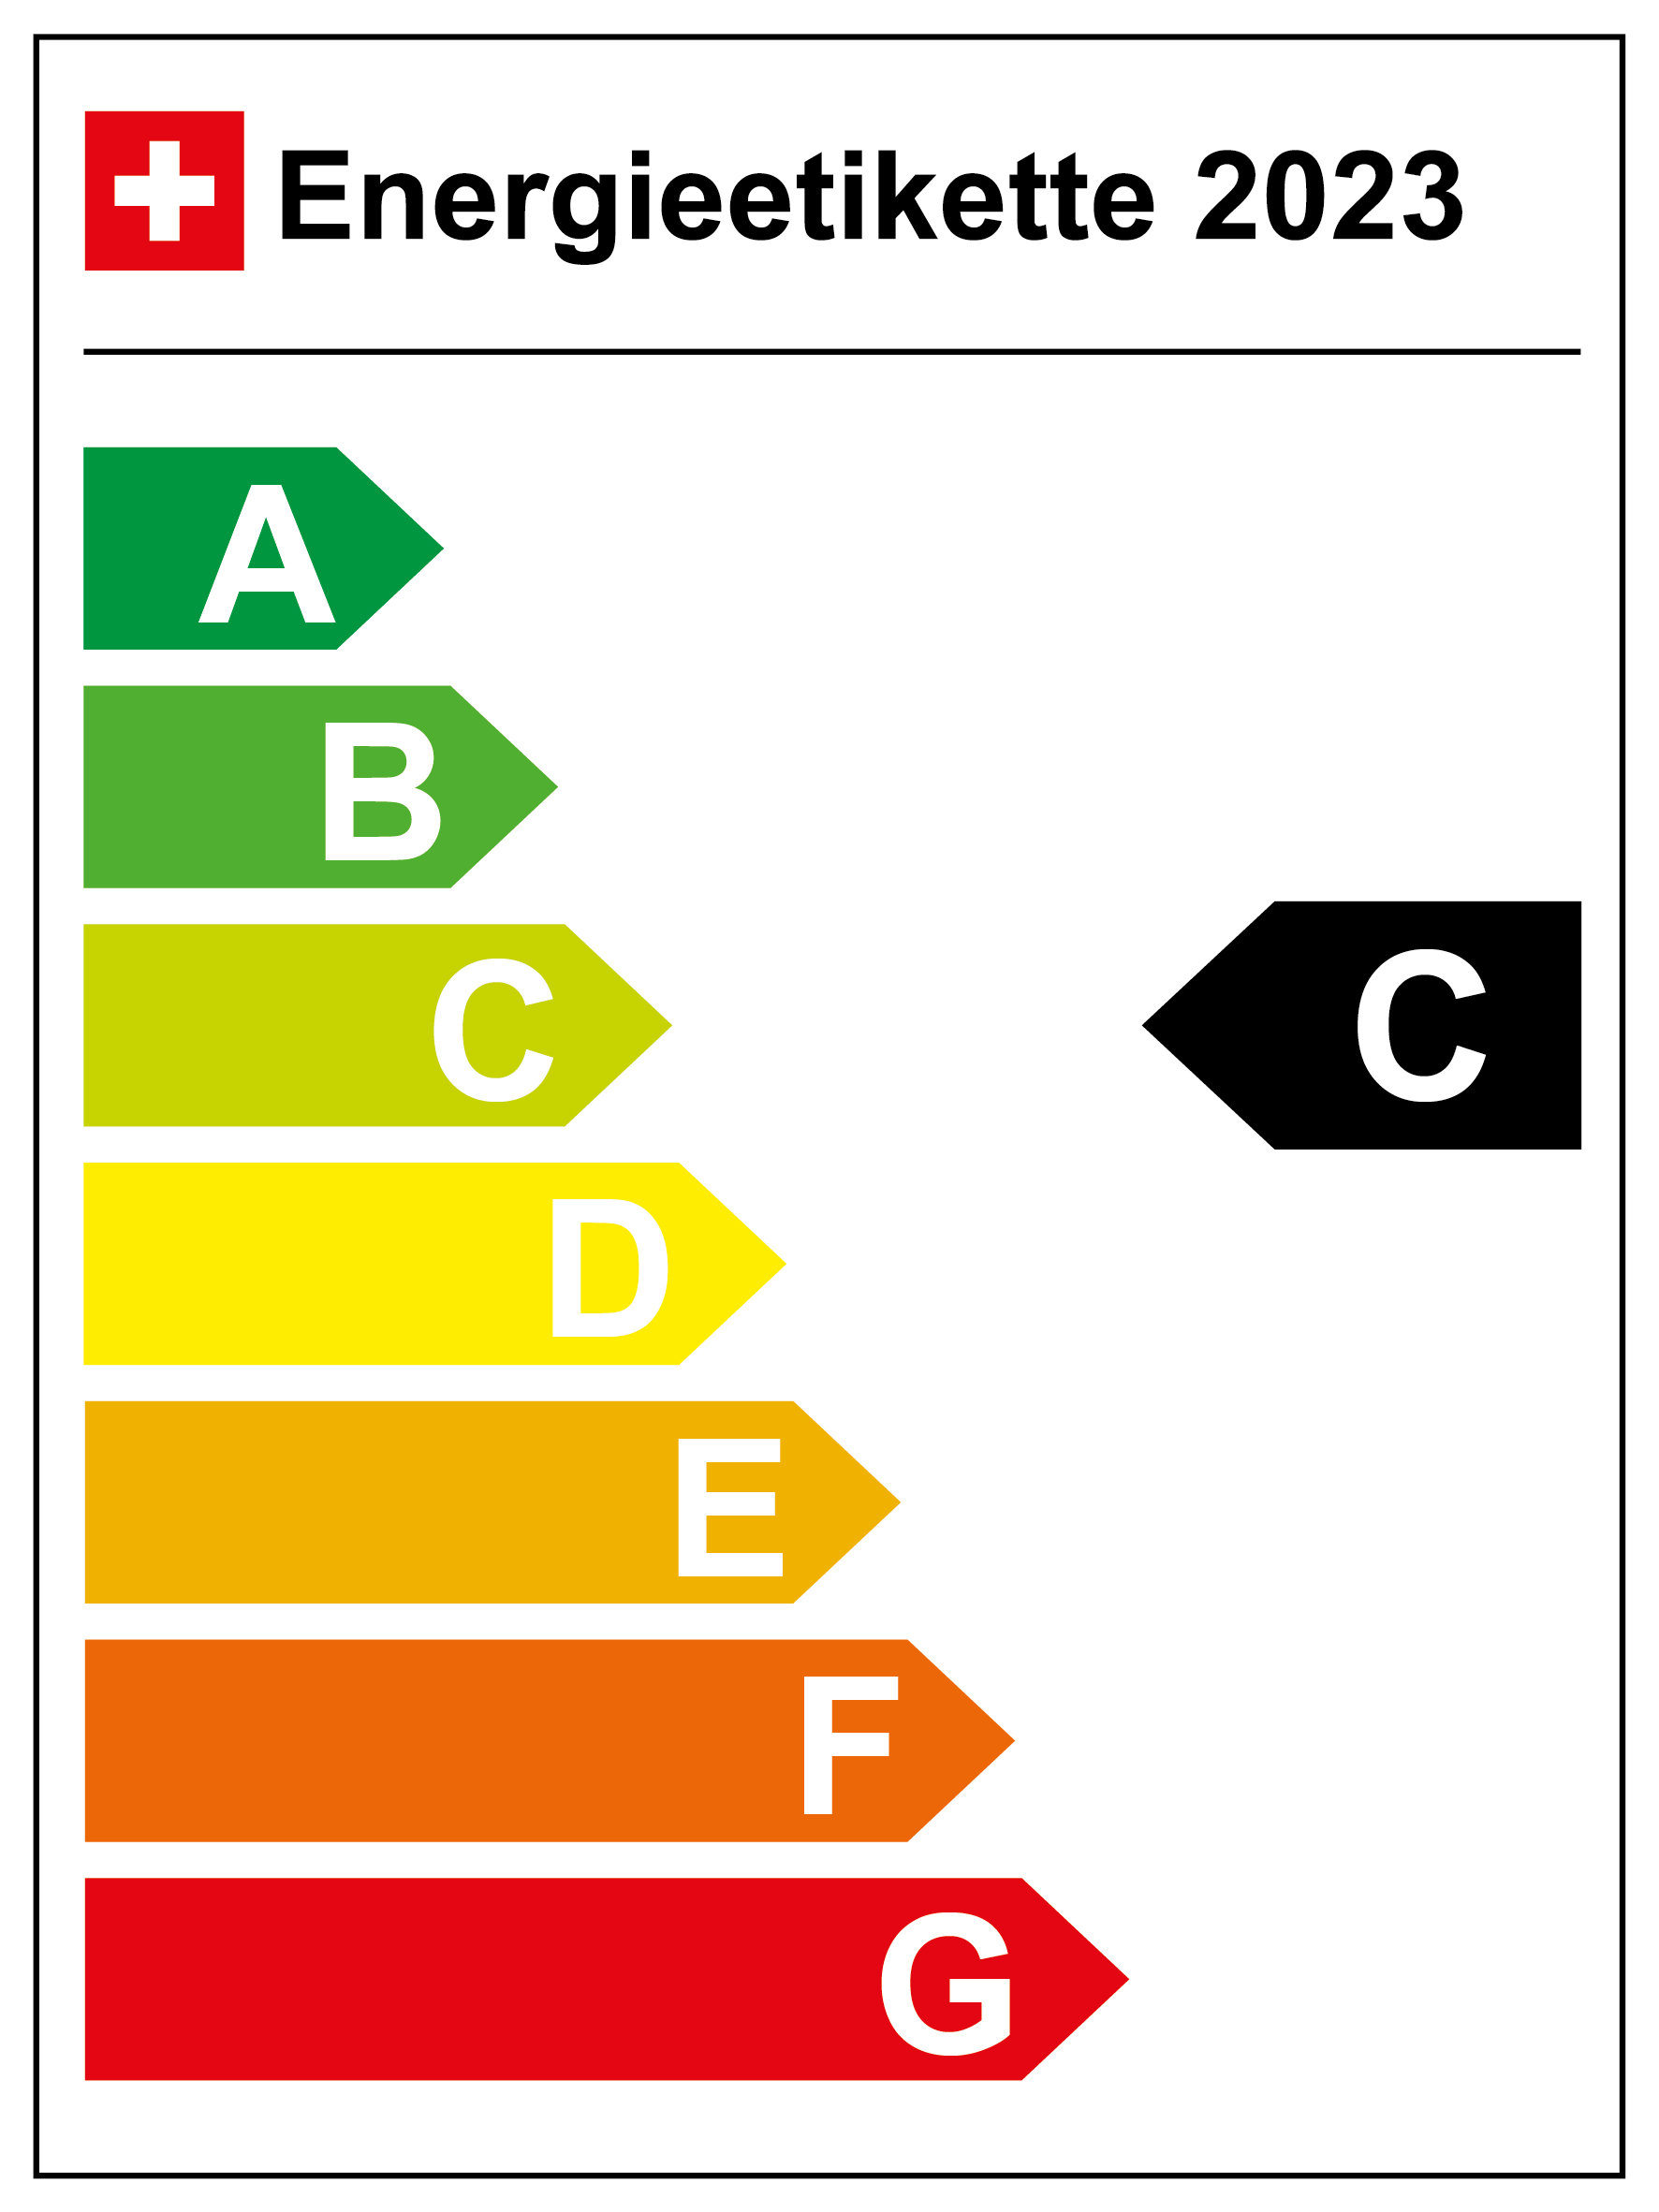 Energieeffizienz-Kategorie: C